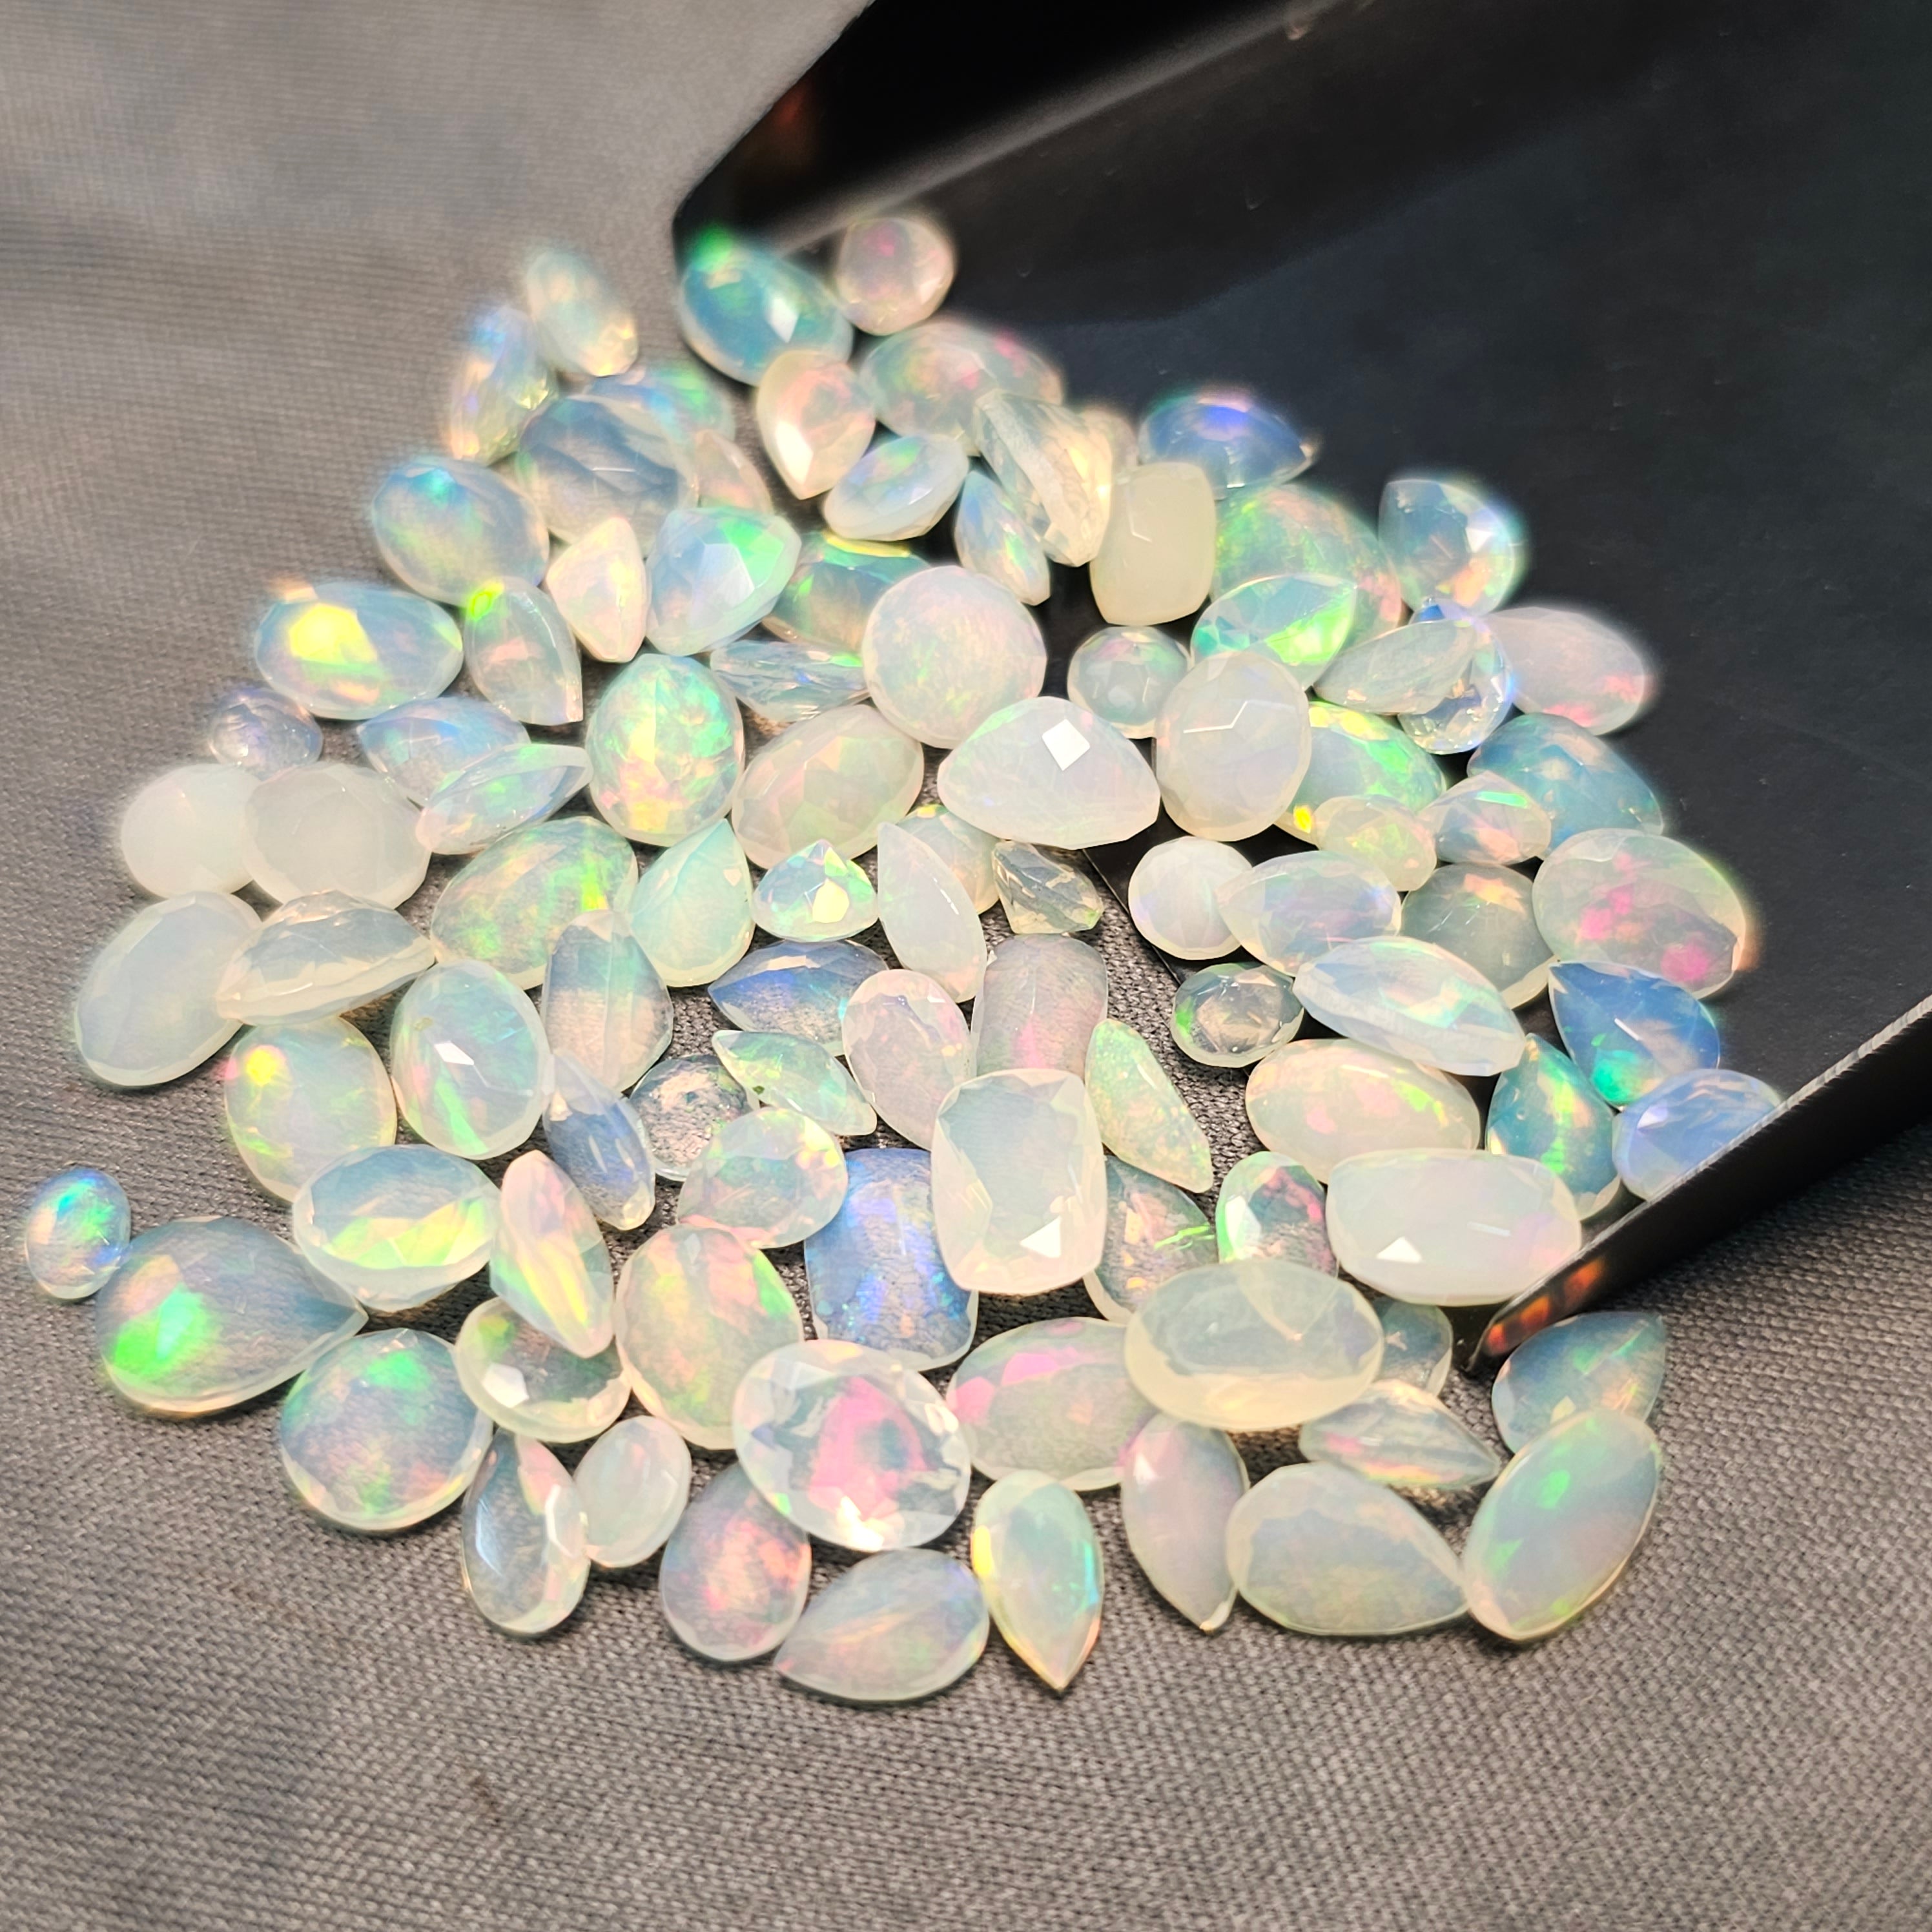 98 pcs Natural Ethiopian Opal  Opal Faceted Gemstone Mix Shape3-8mm - The LabradoriteKing